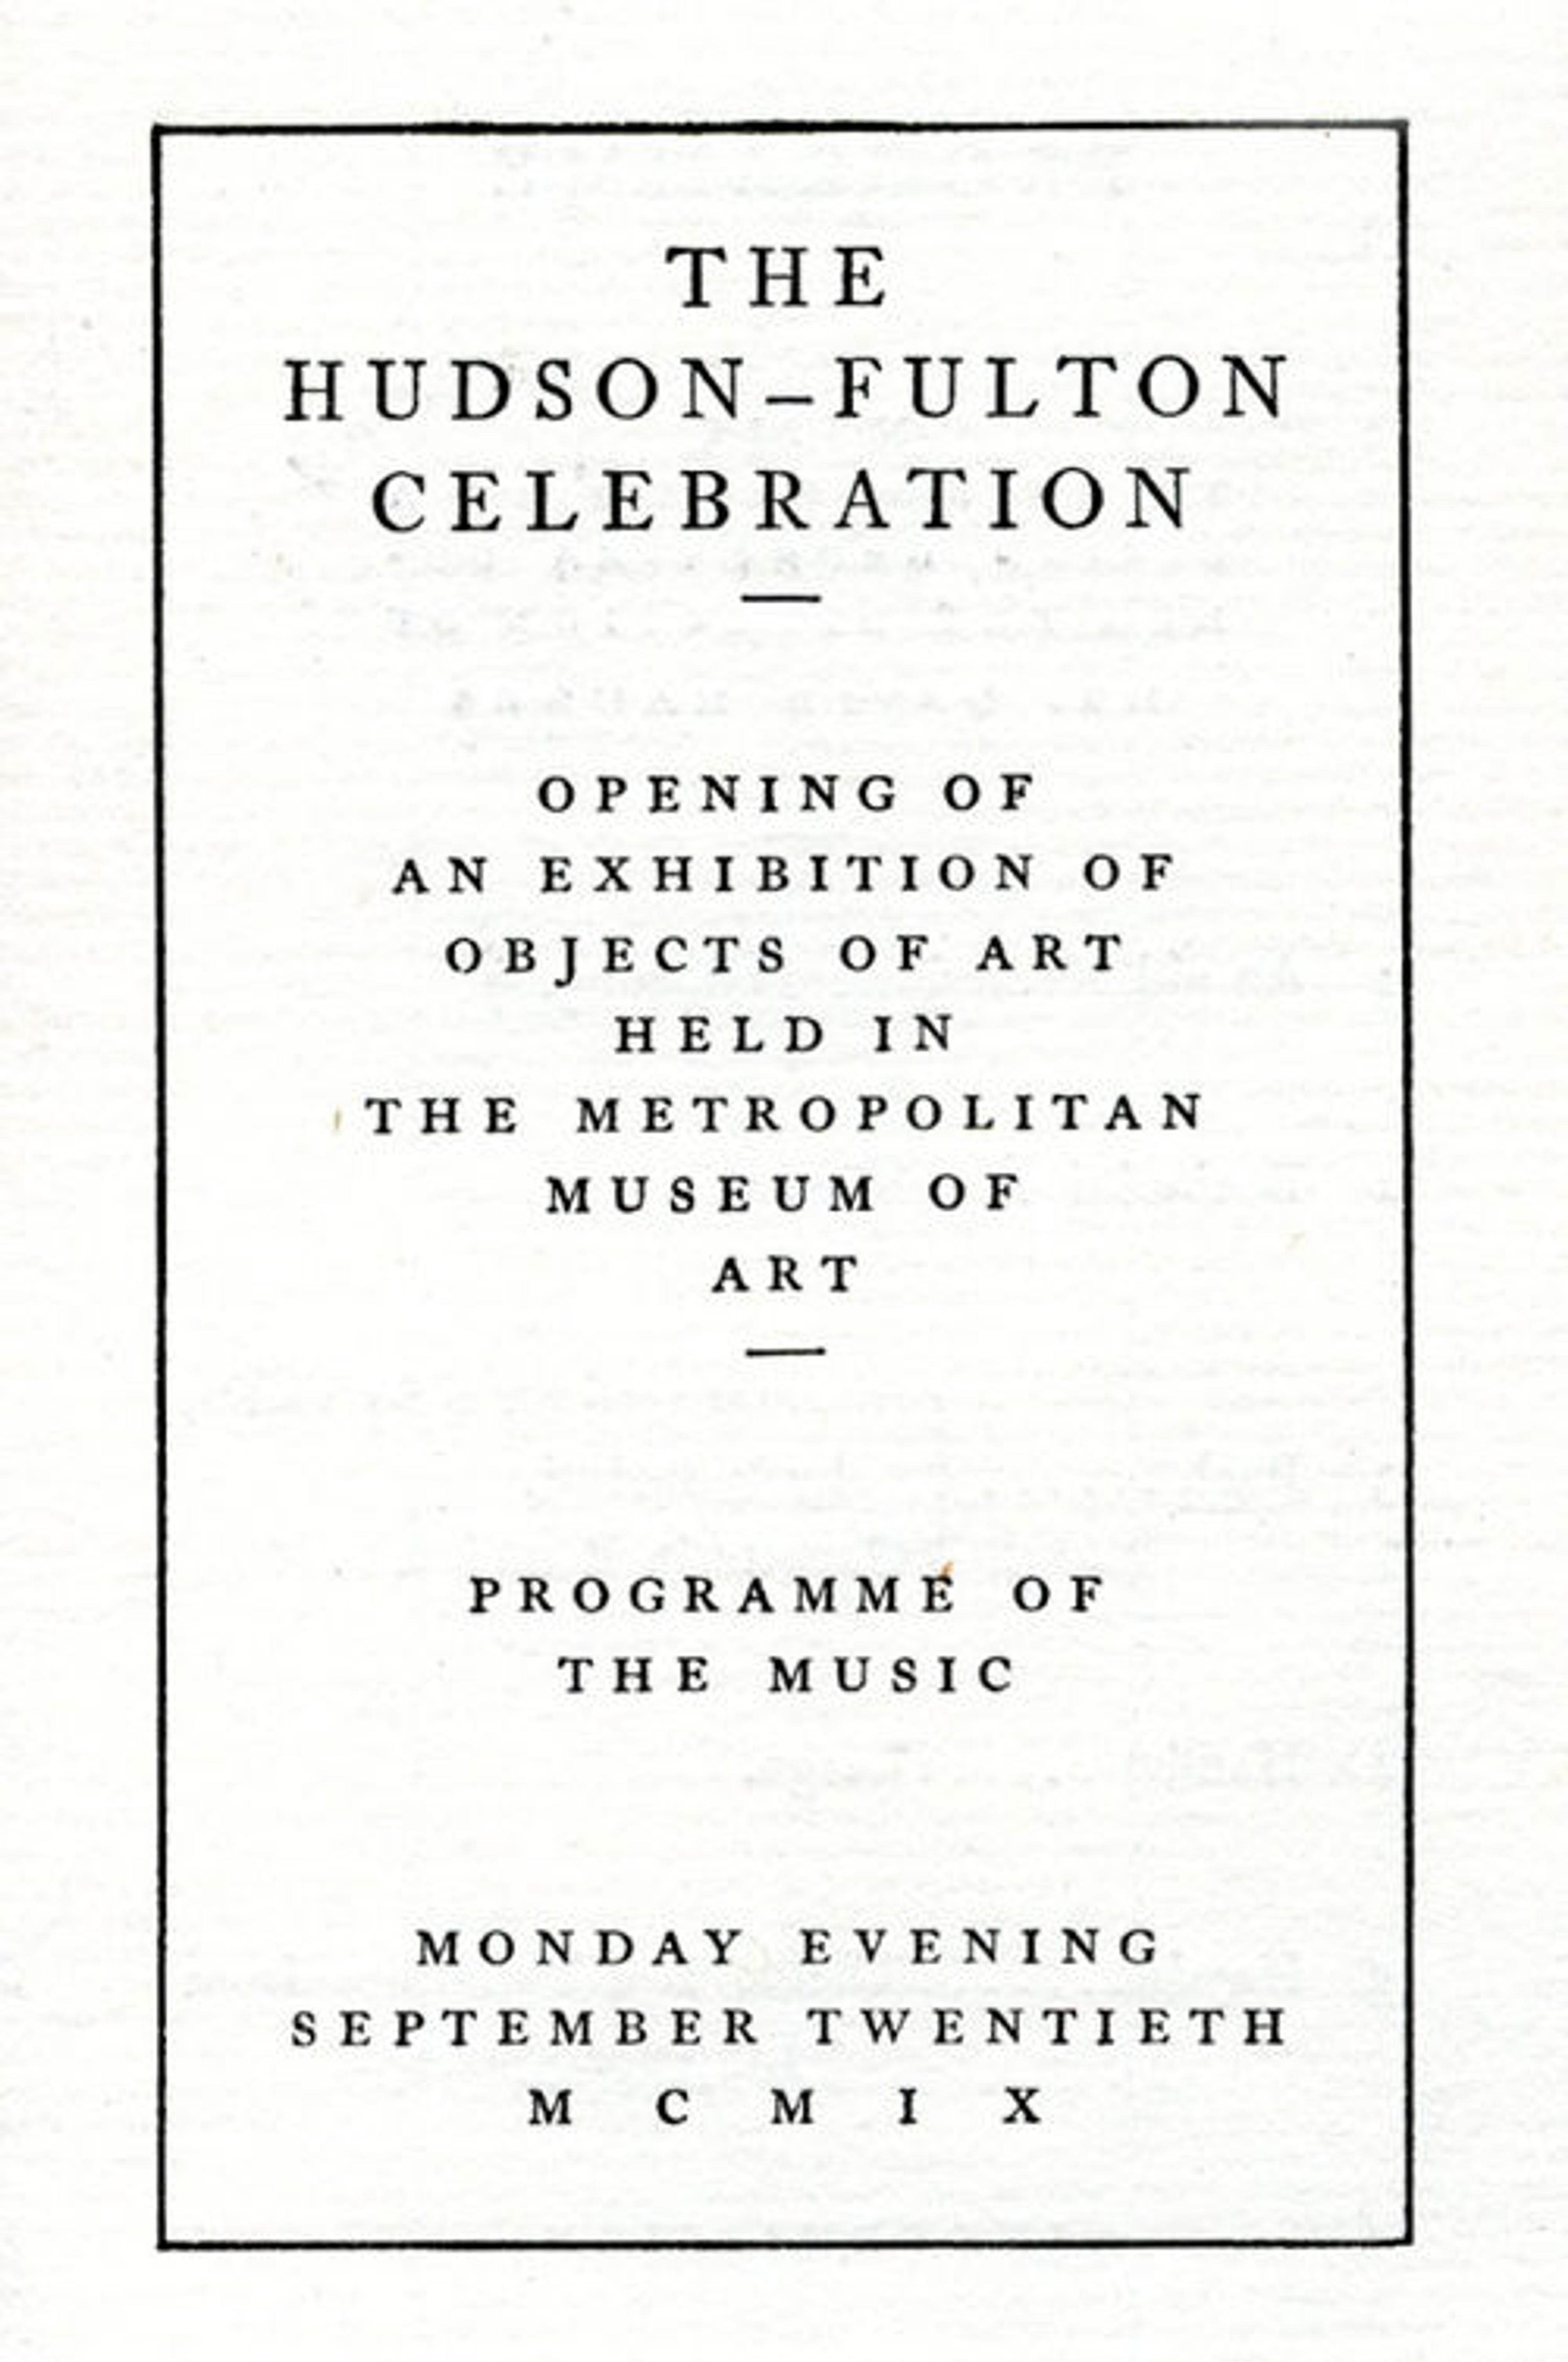 Program for opening of the Hudson-Fulton Celebration exhibition